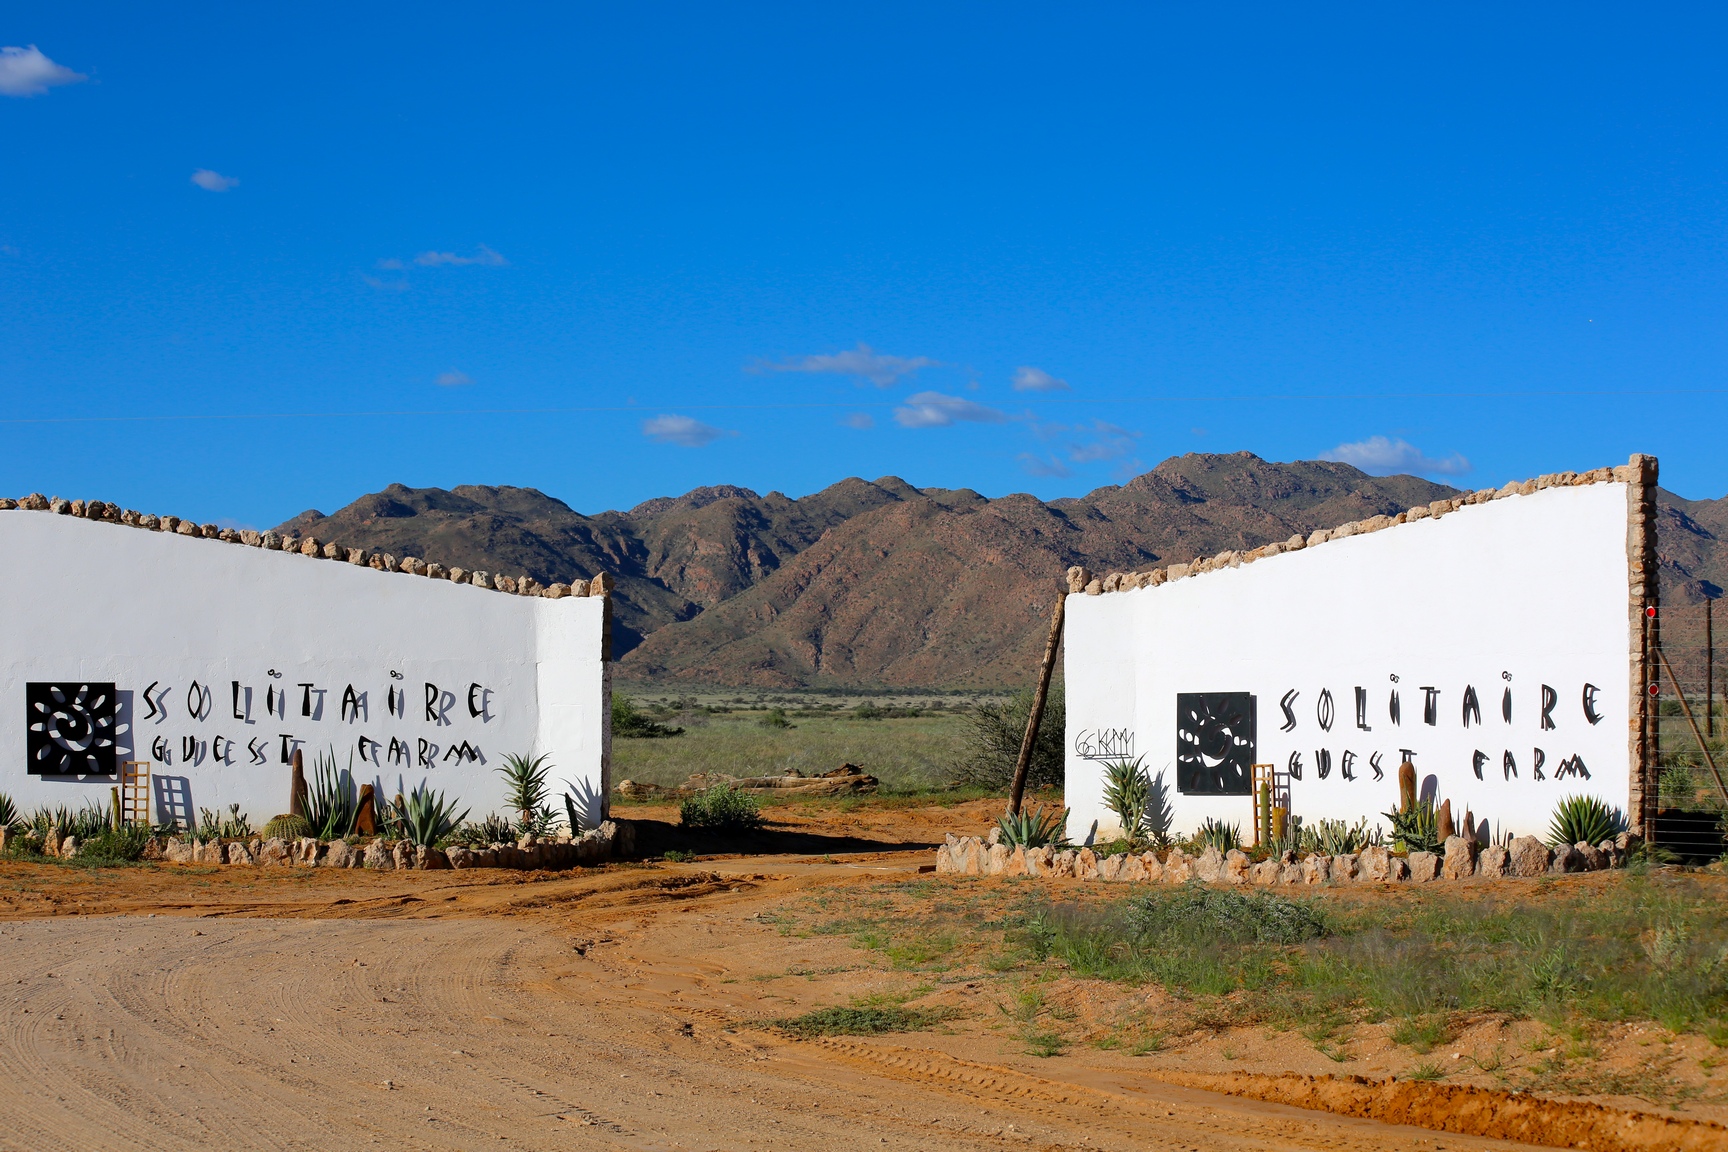 Solitaire Desert Farm, Namibia